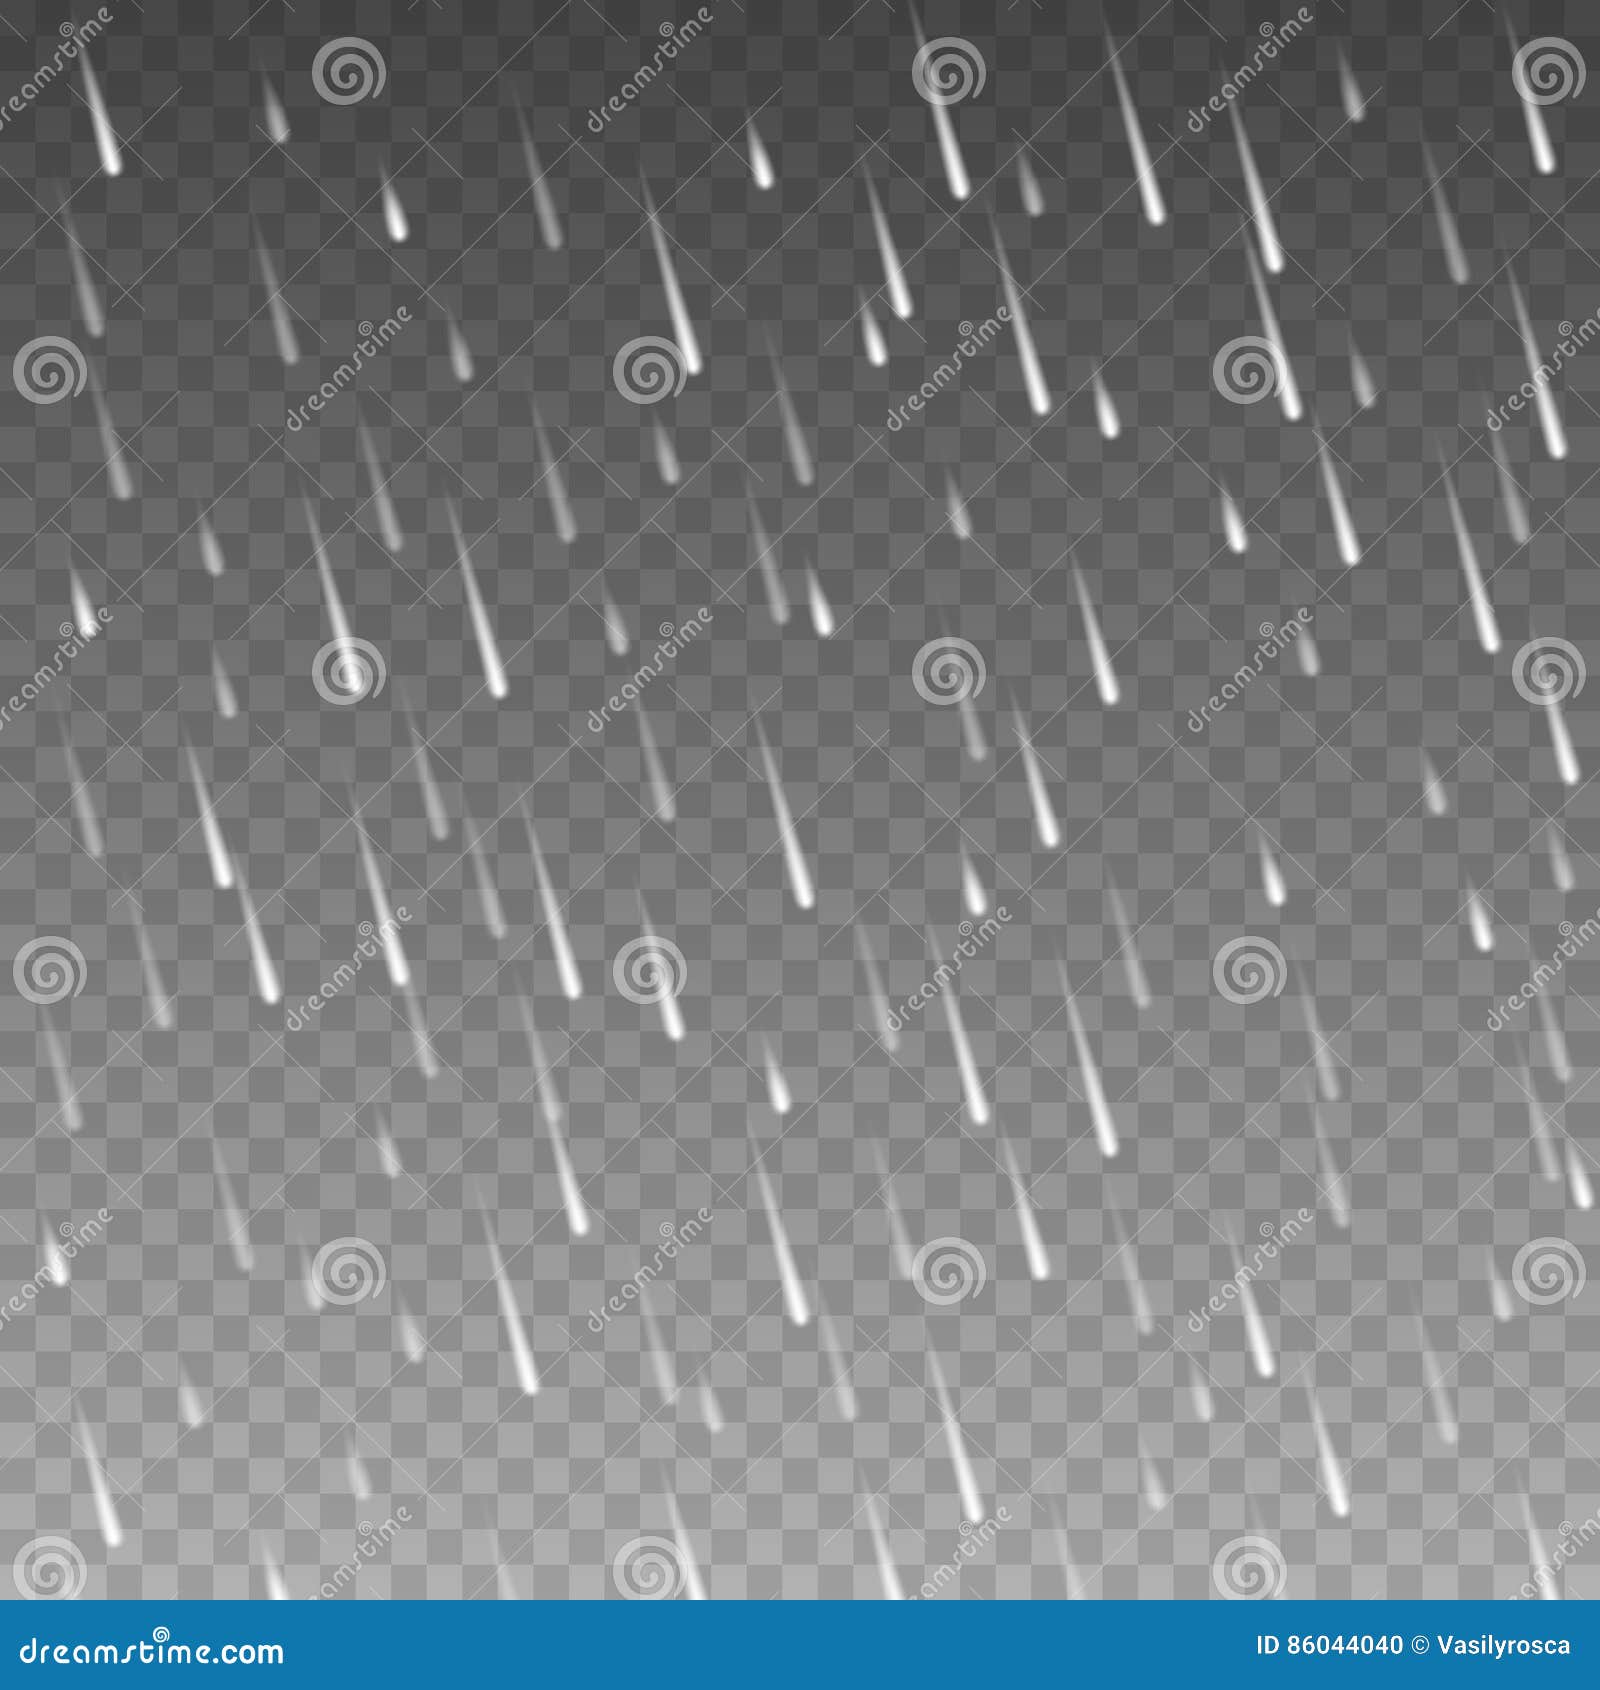 rainfall  template on transparent grid. rain effect  template